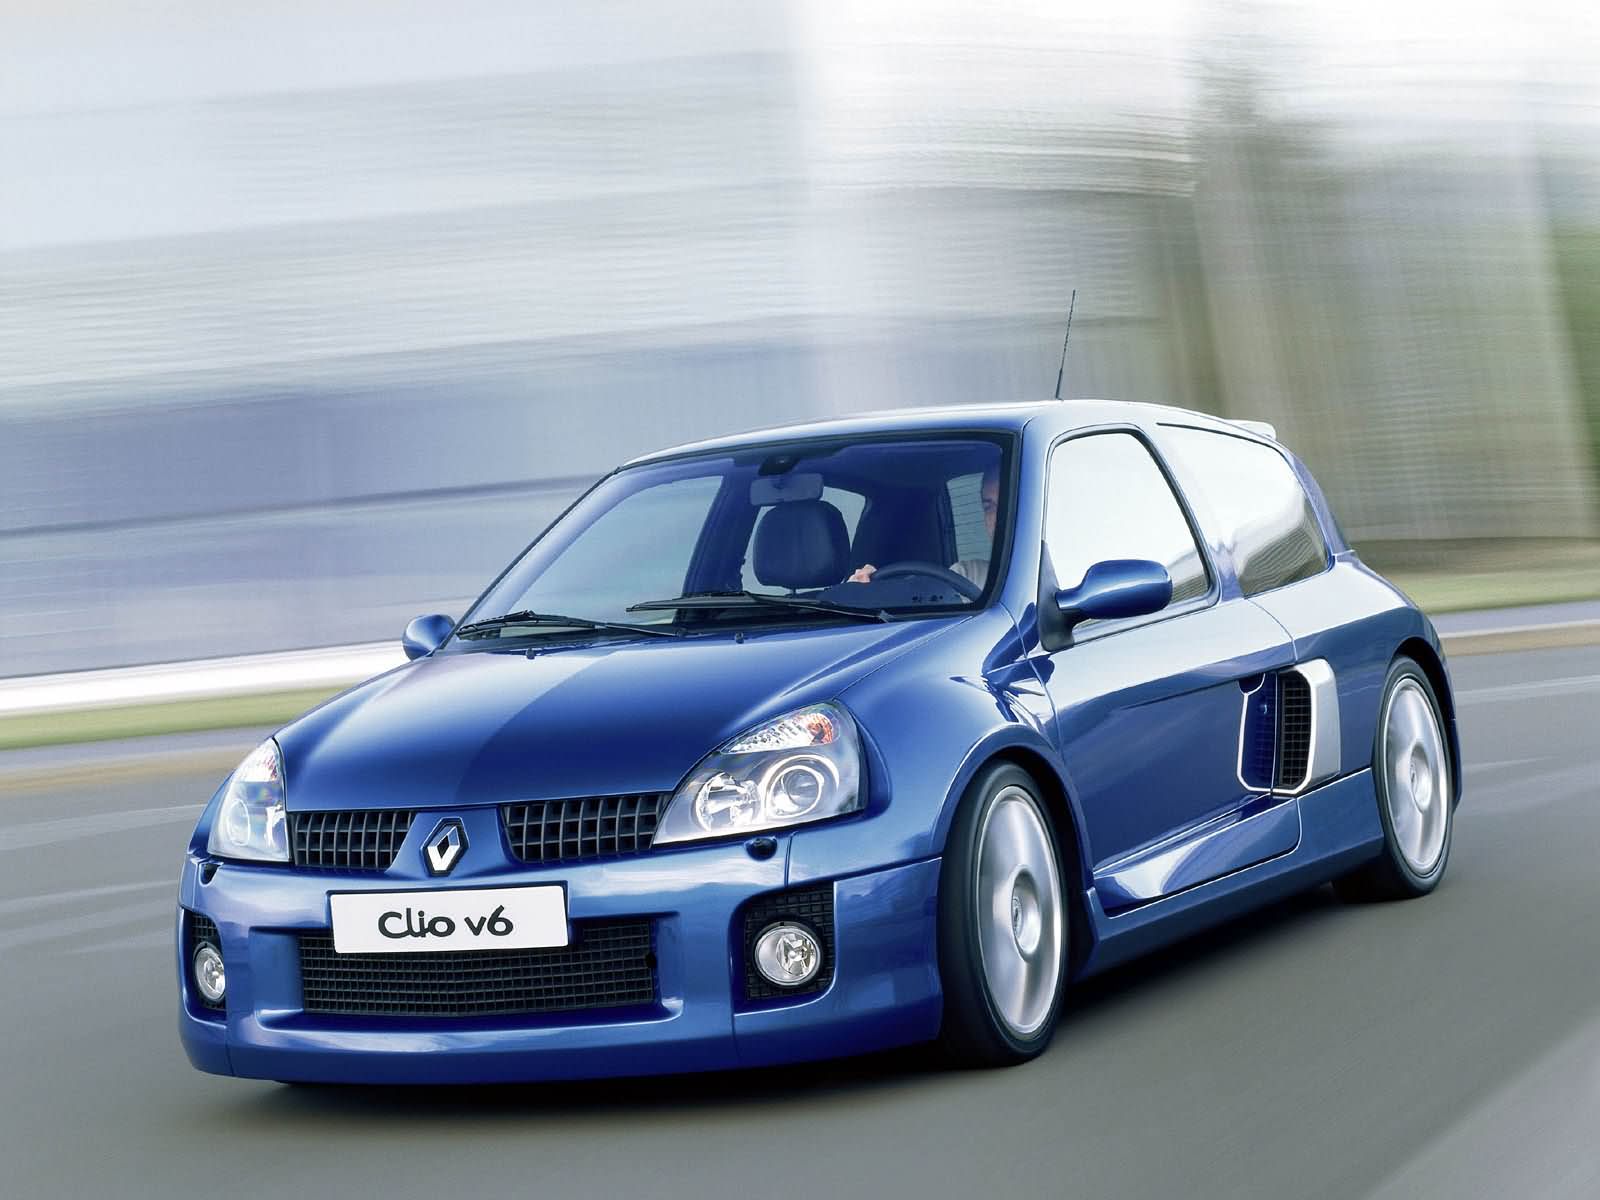 Download High quality Blue Slio v6 Renault wallpaper / 1600x1200